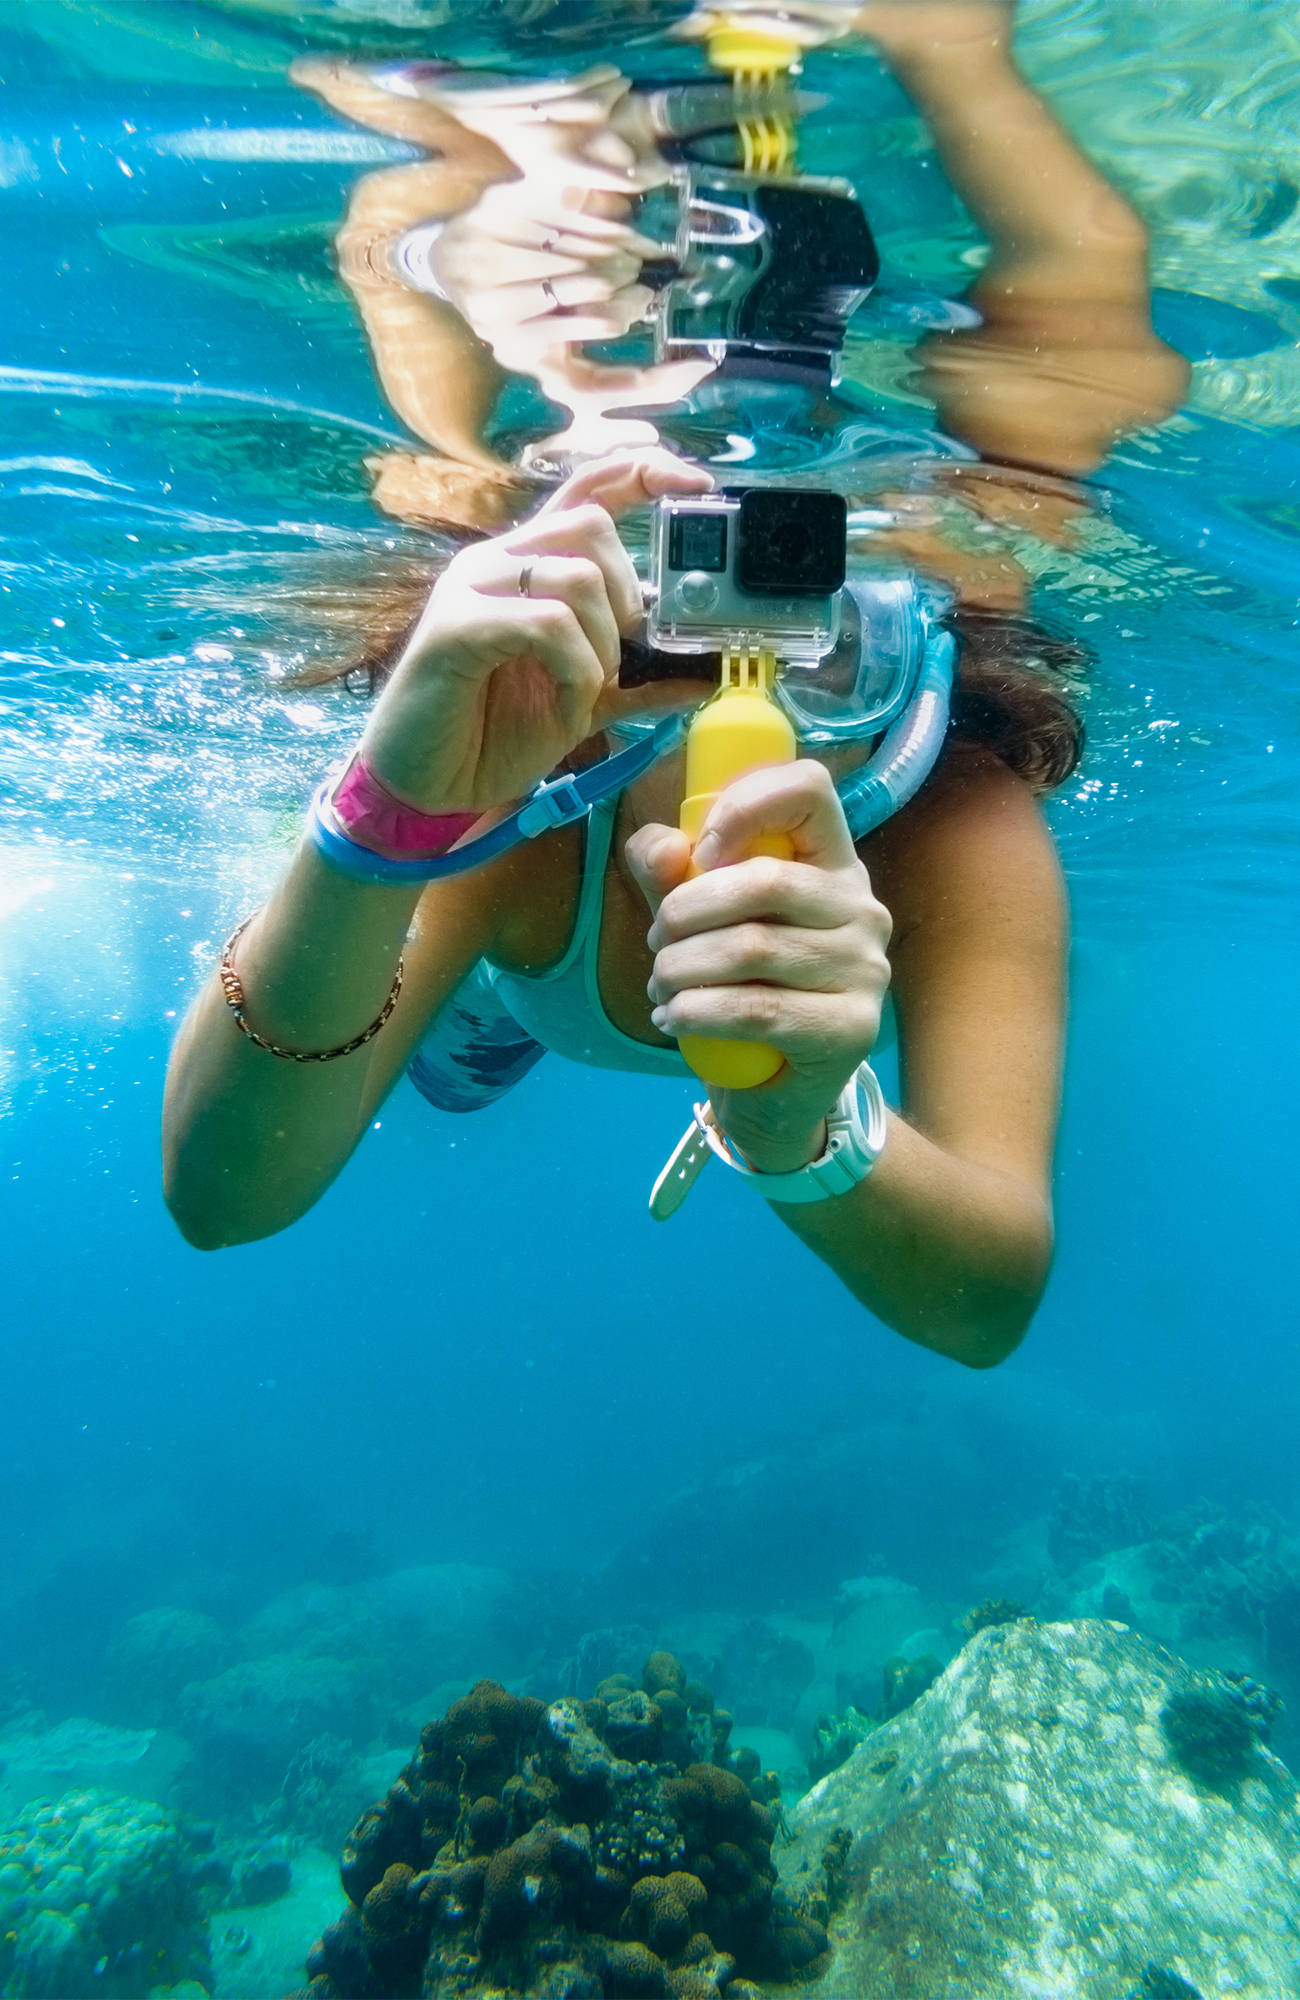 koh-tao-thailand-underwater-woman-photographing-sidebar